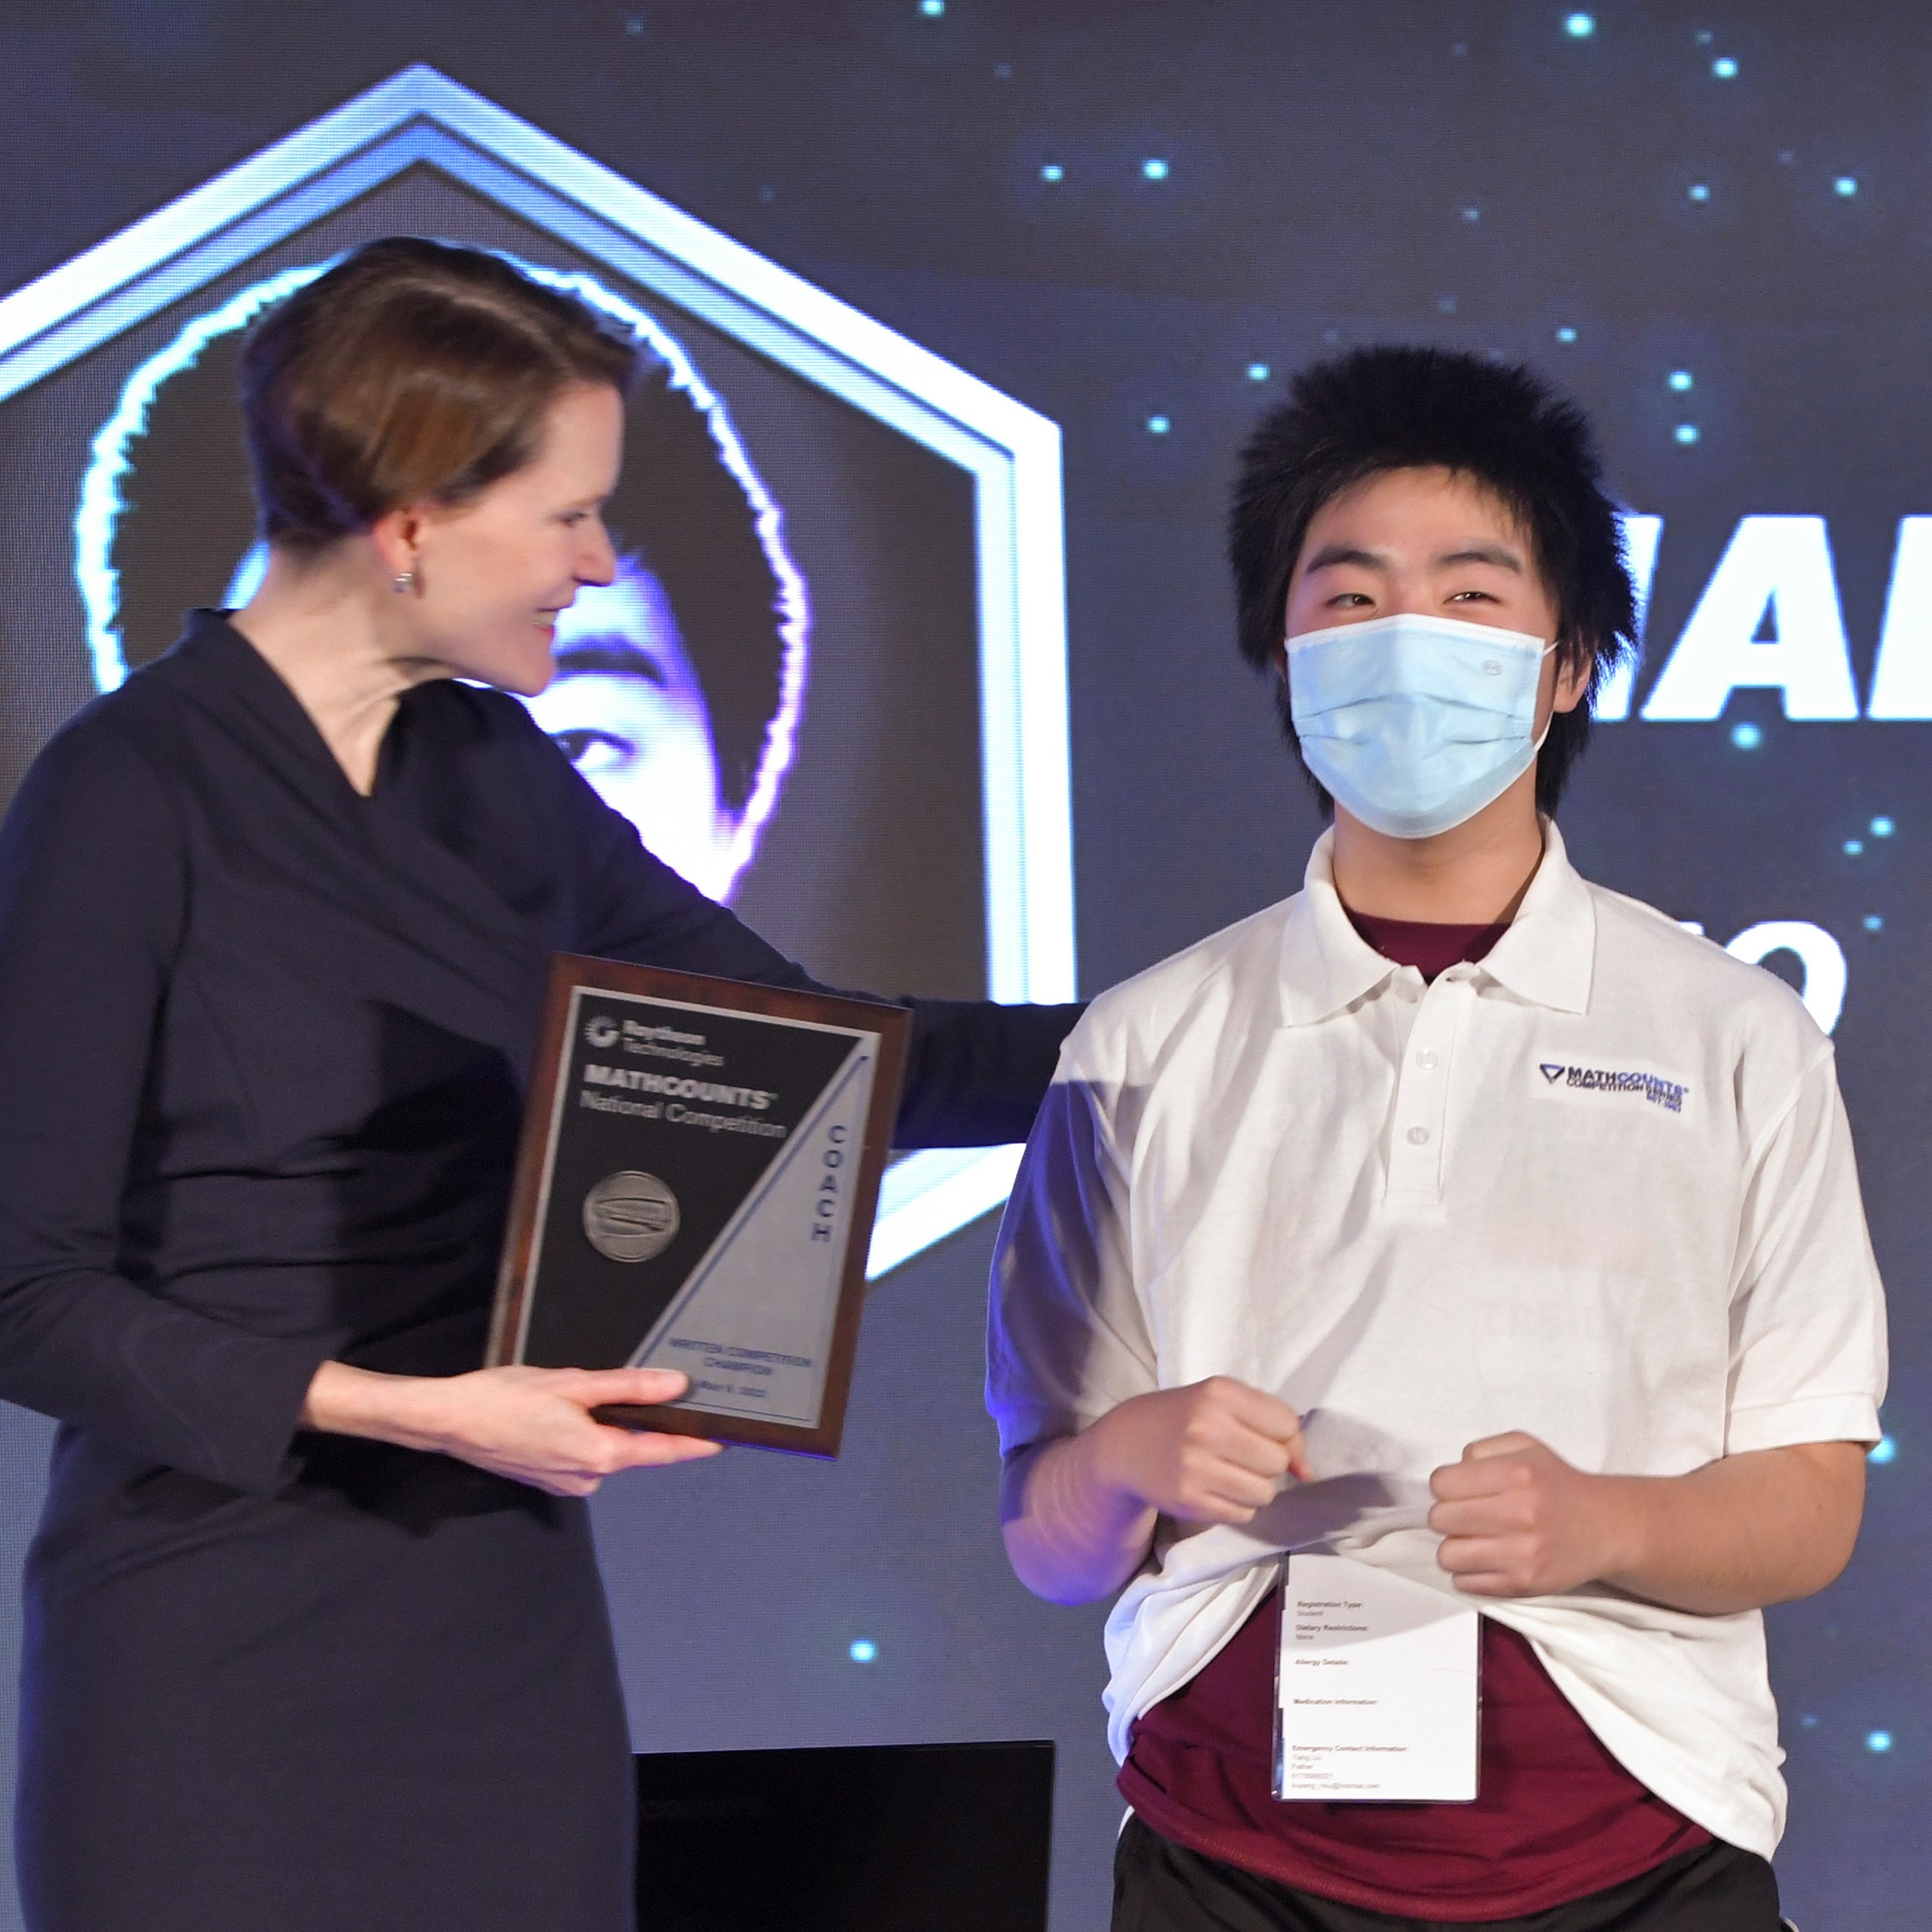 Jiahe Jiu accepts his award.